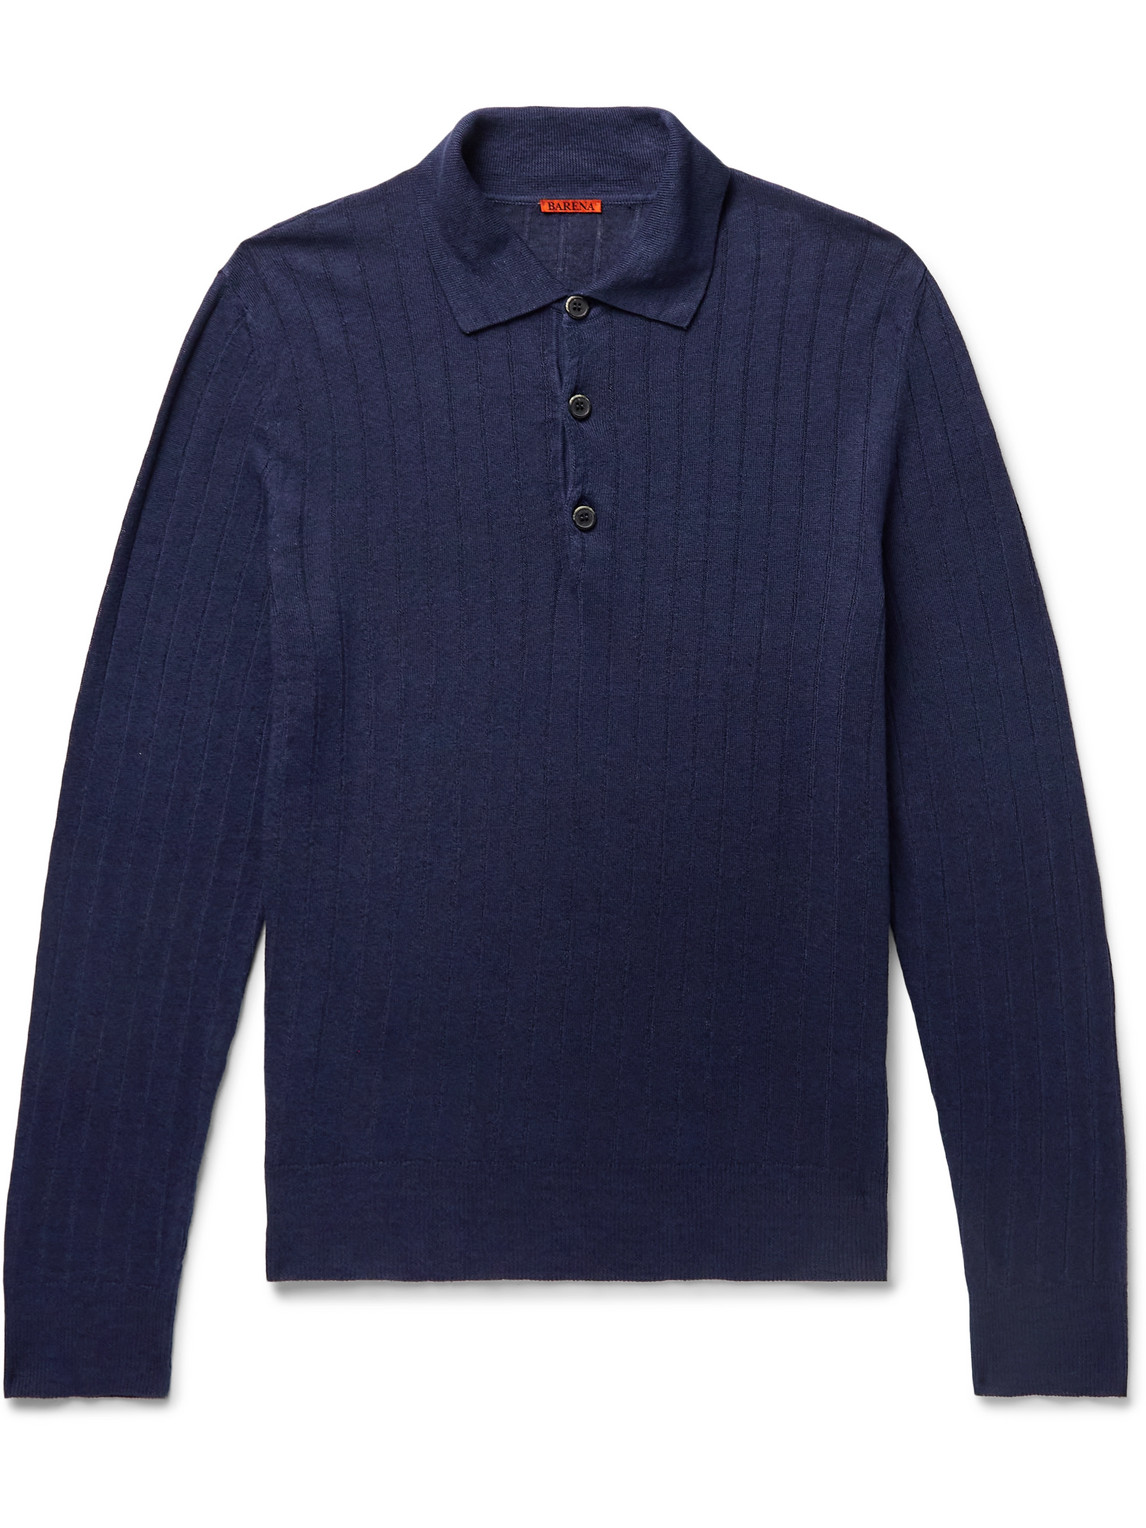 Pevaron Ribbed Linen and Cotton-Blend Polo Shirt